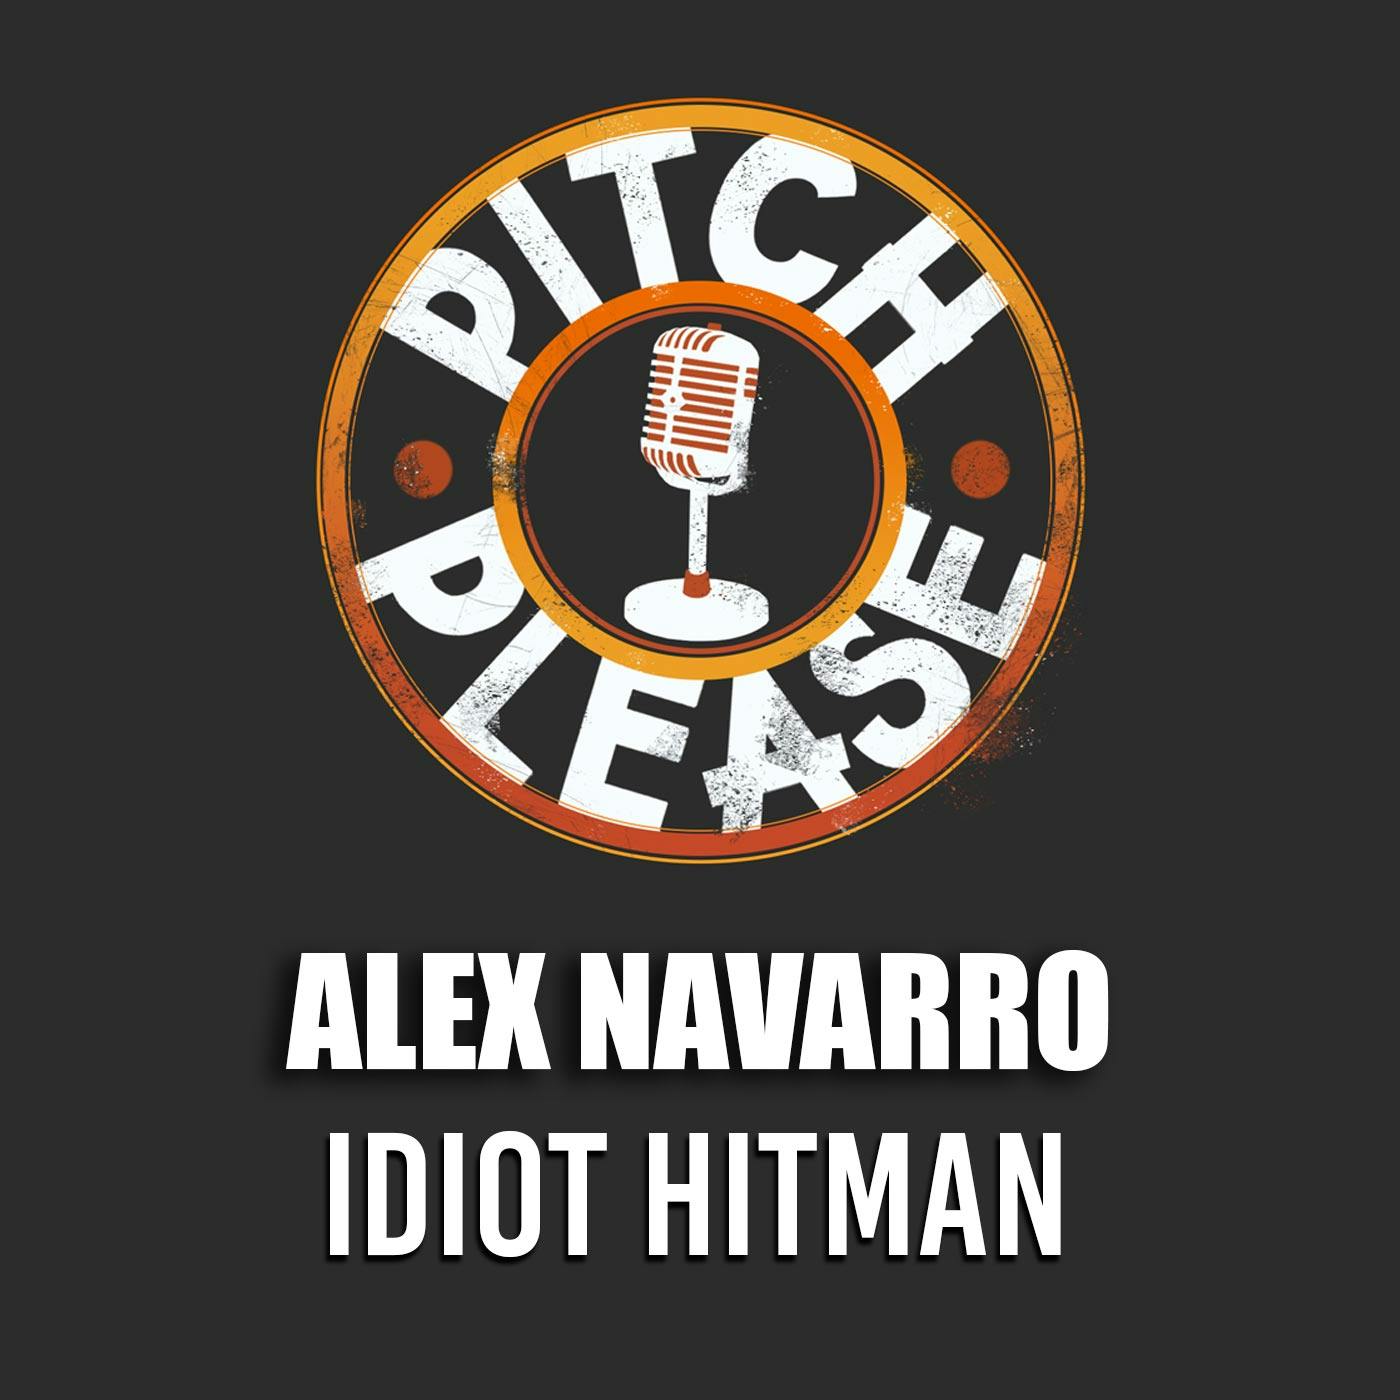 (Alex Navarro) Idiot Hitman - Pitch, Please